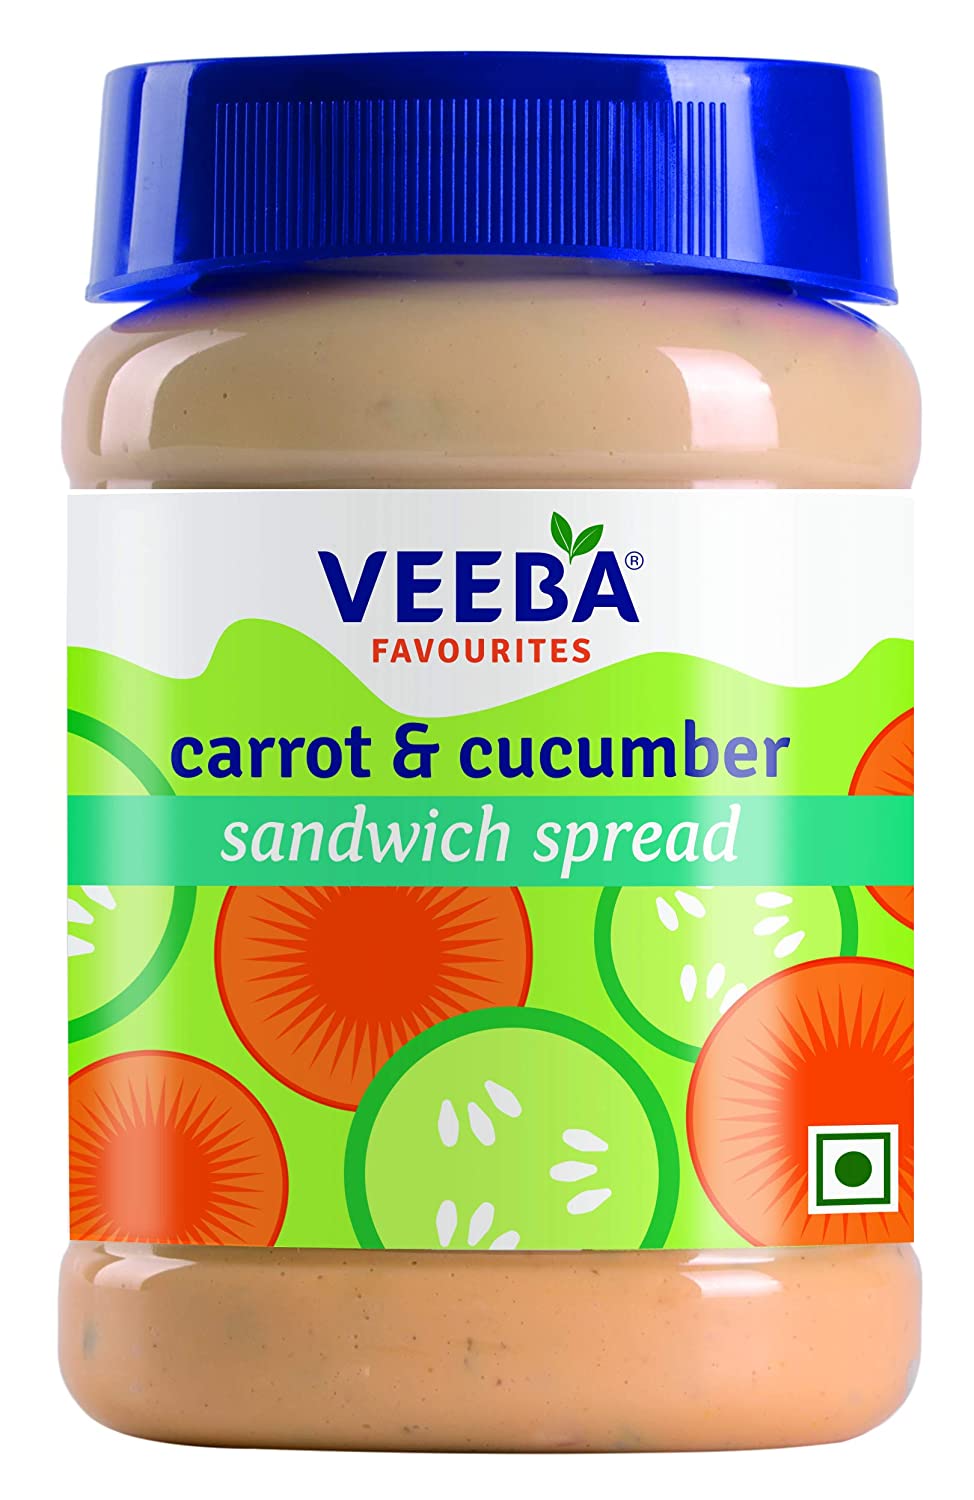 Veeba Carrot and Cucumber Sandwich Spread Image